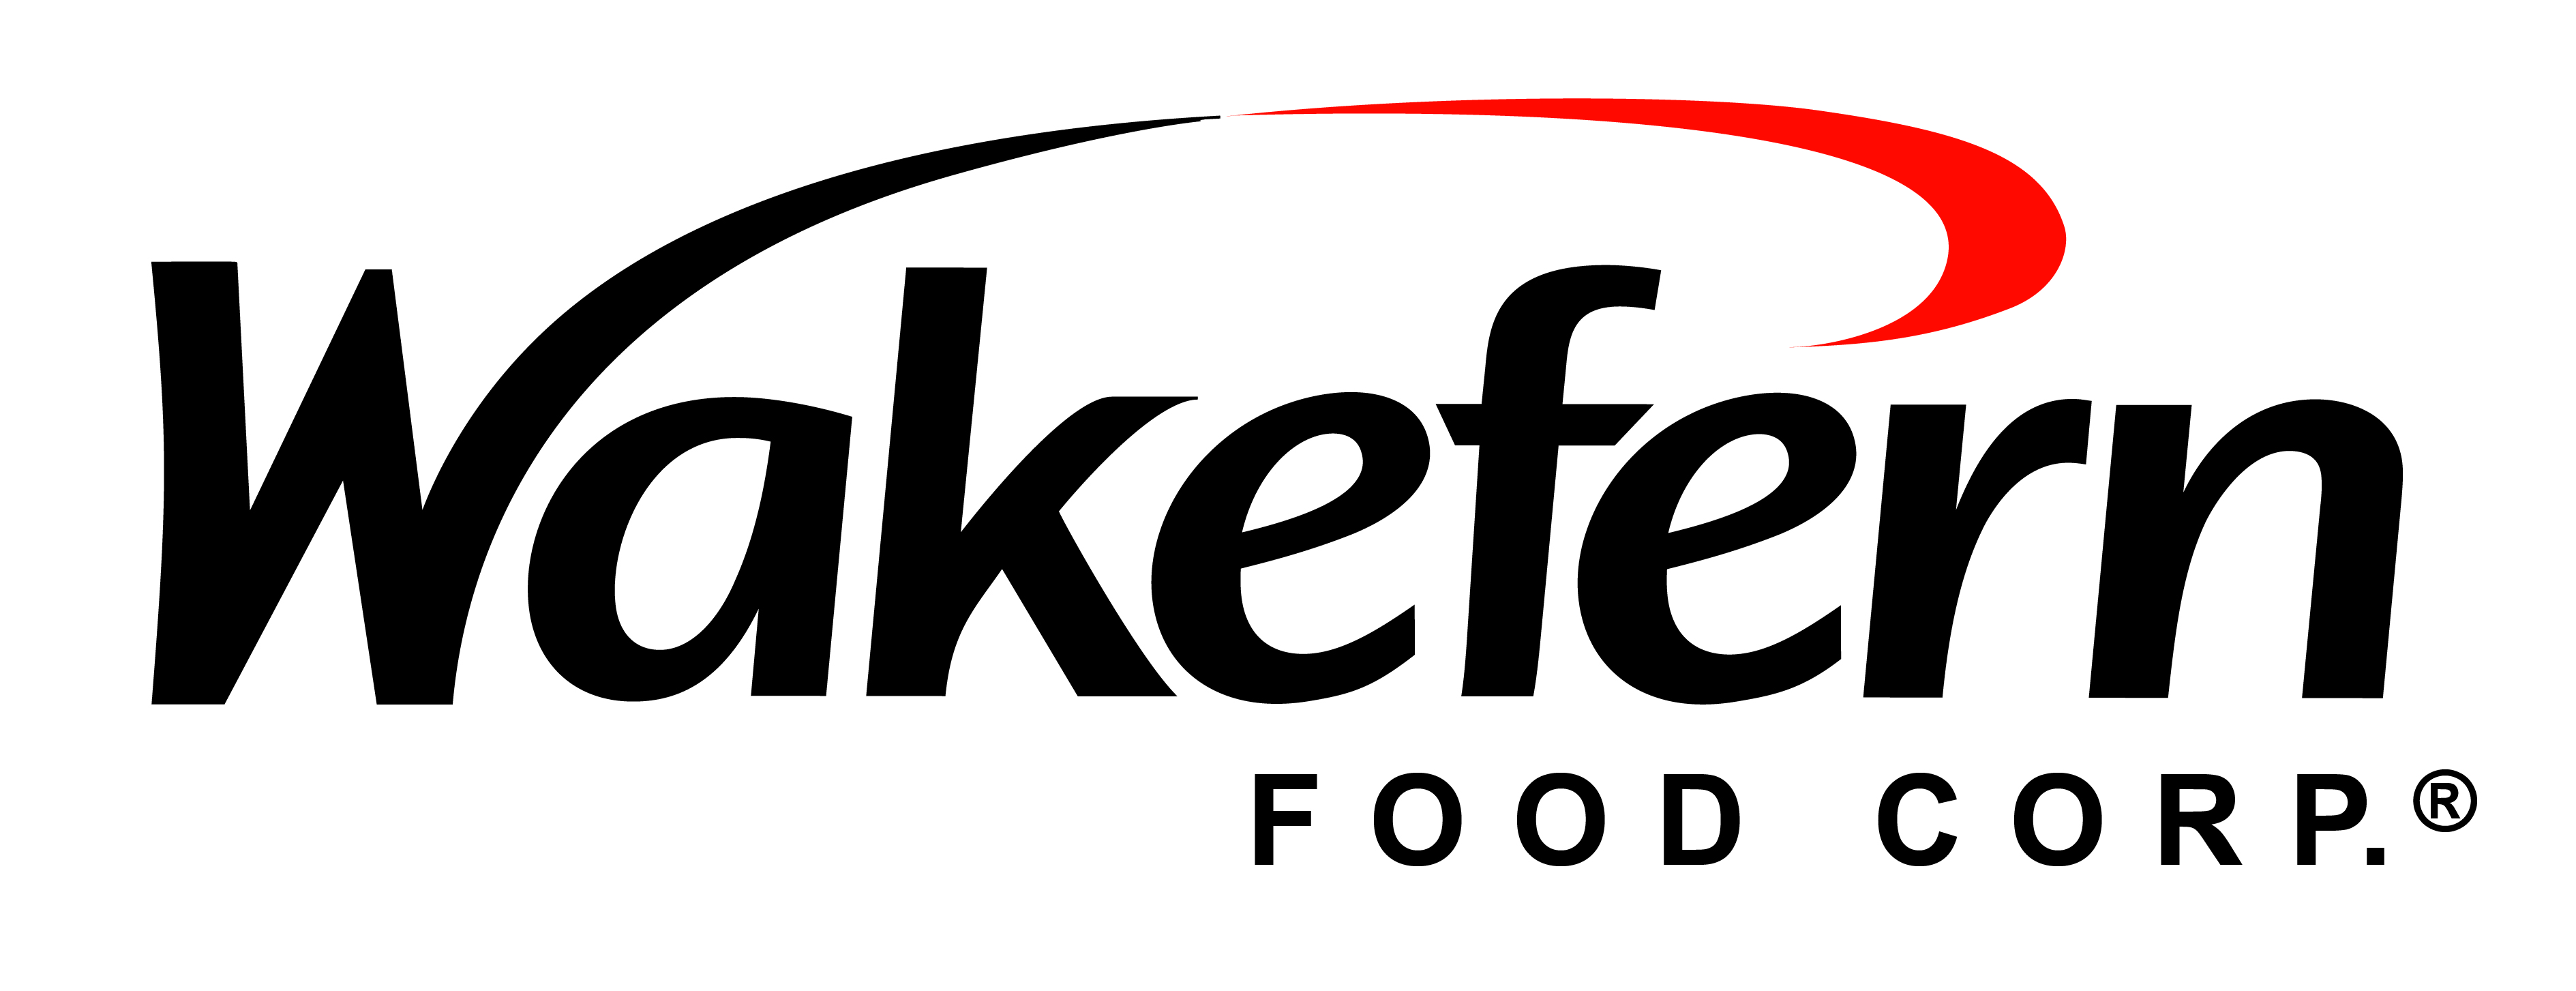 Wakefern Food Corp.